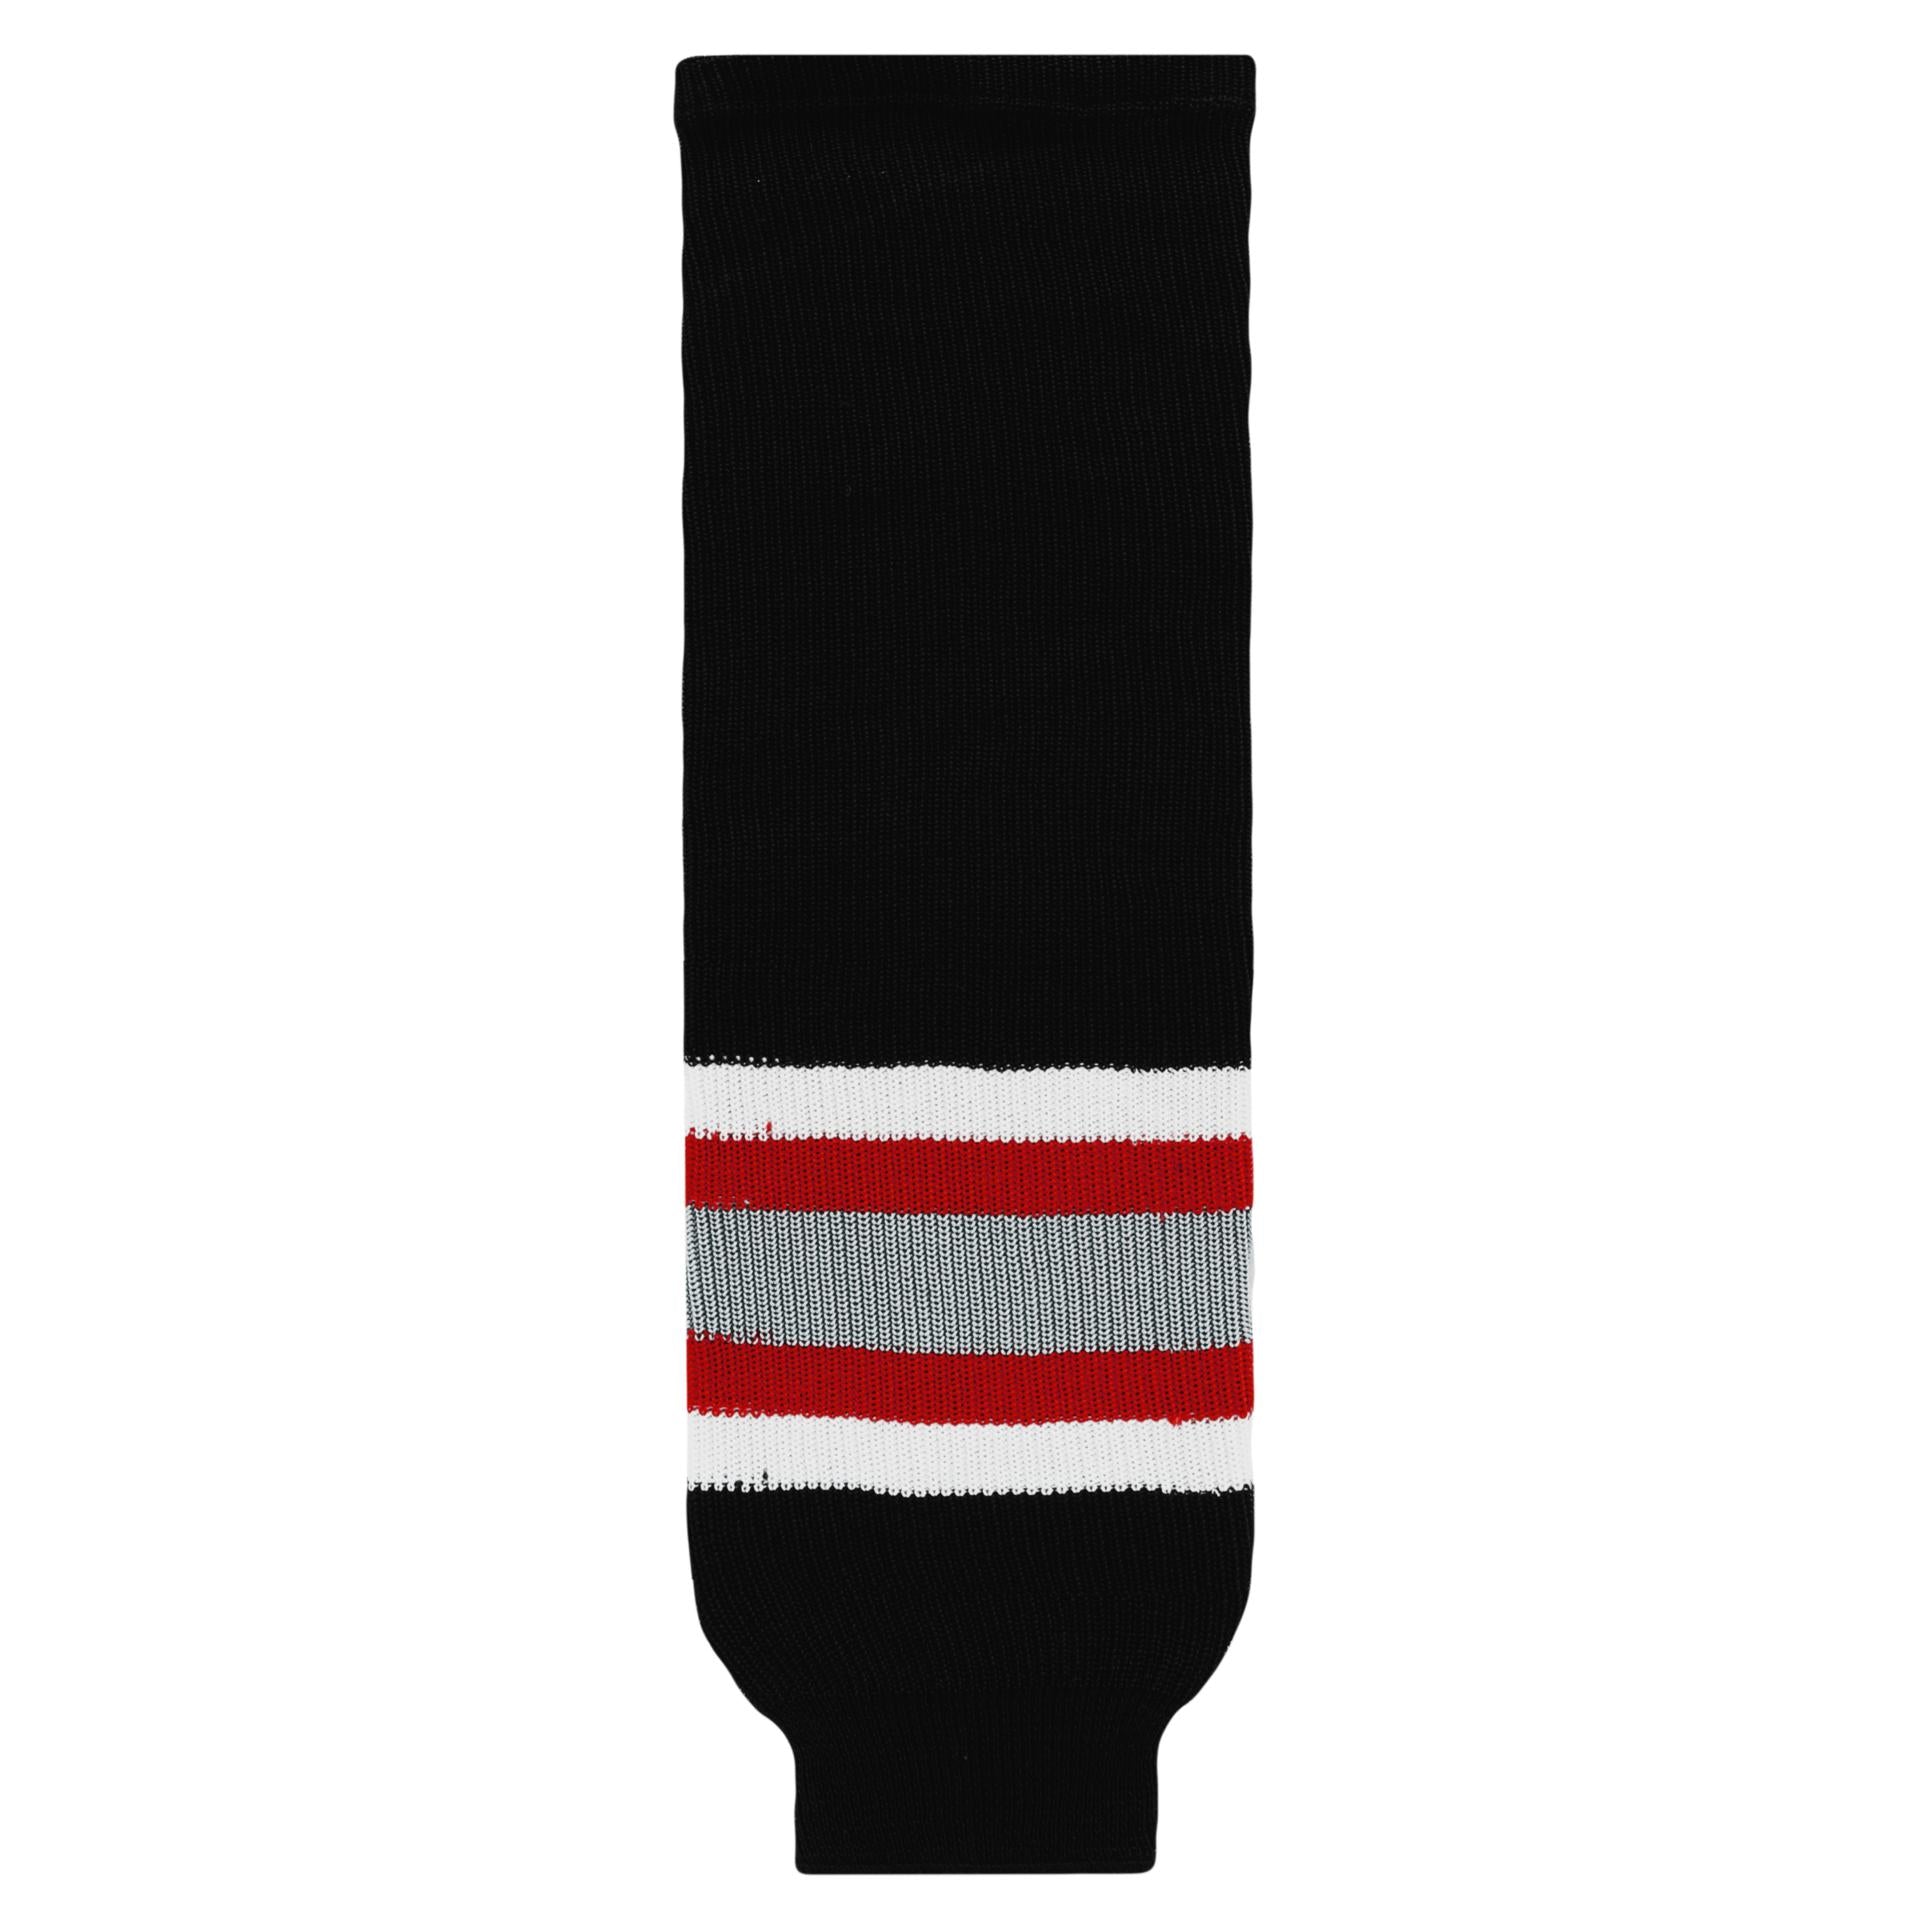 HS630-610 Buffalo Sabres Hockey Socks (Pair)